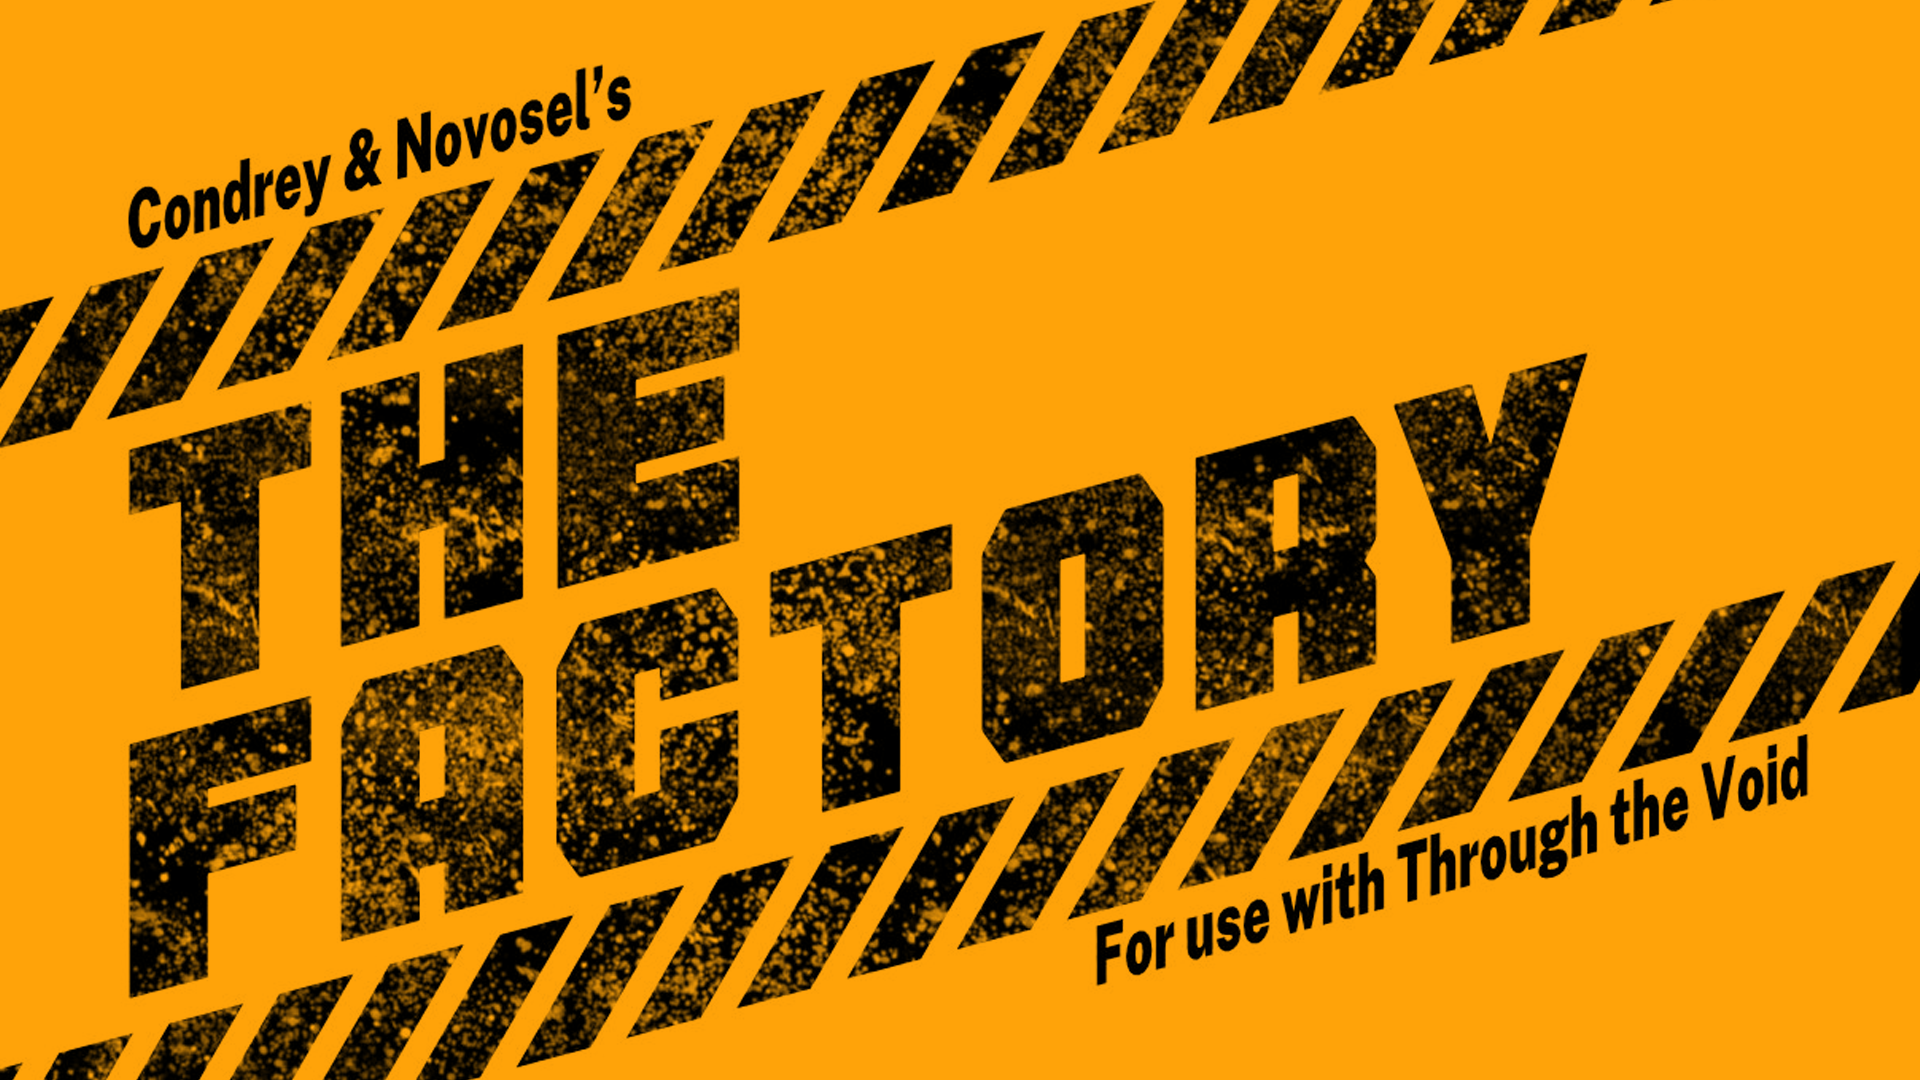 The Factory | Condrey & Novosel's